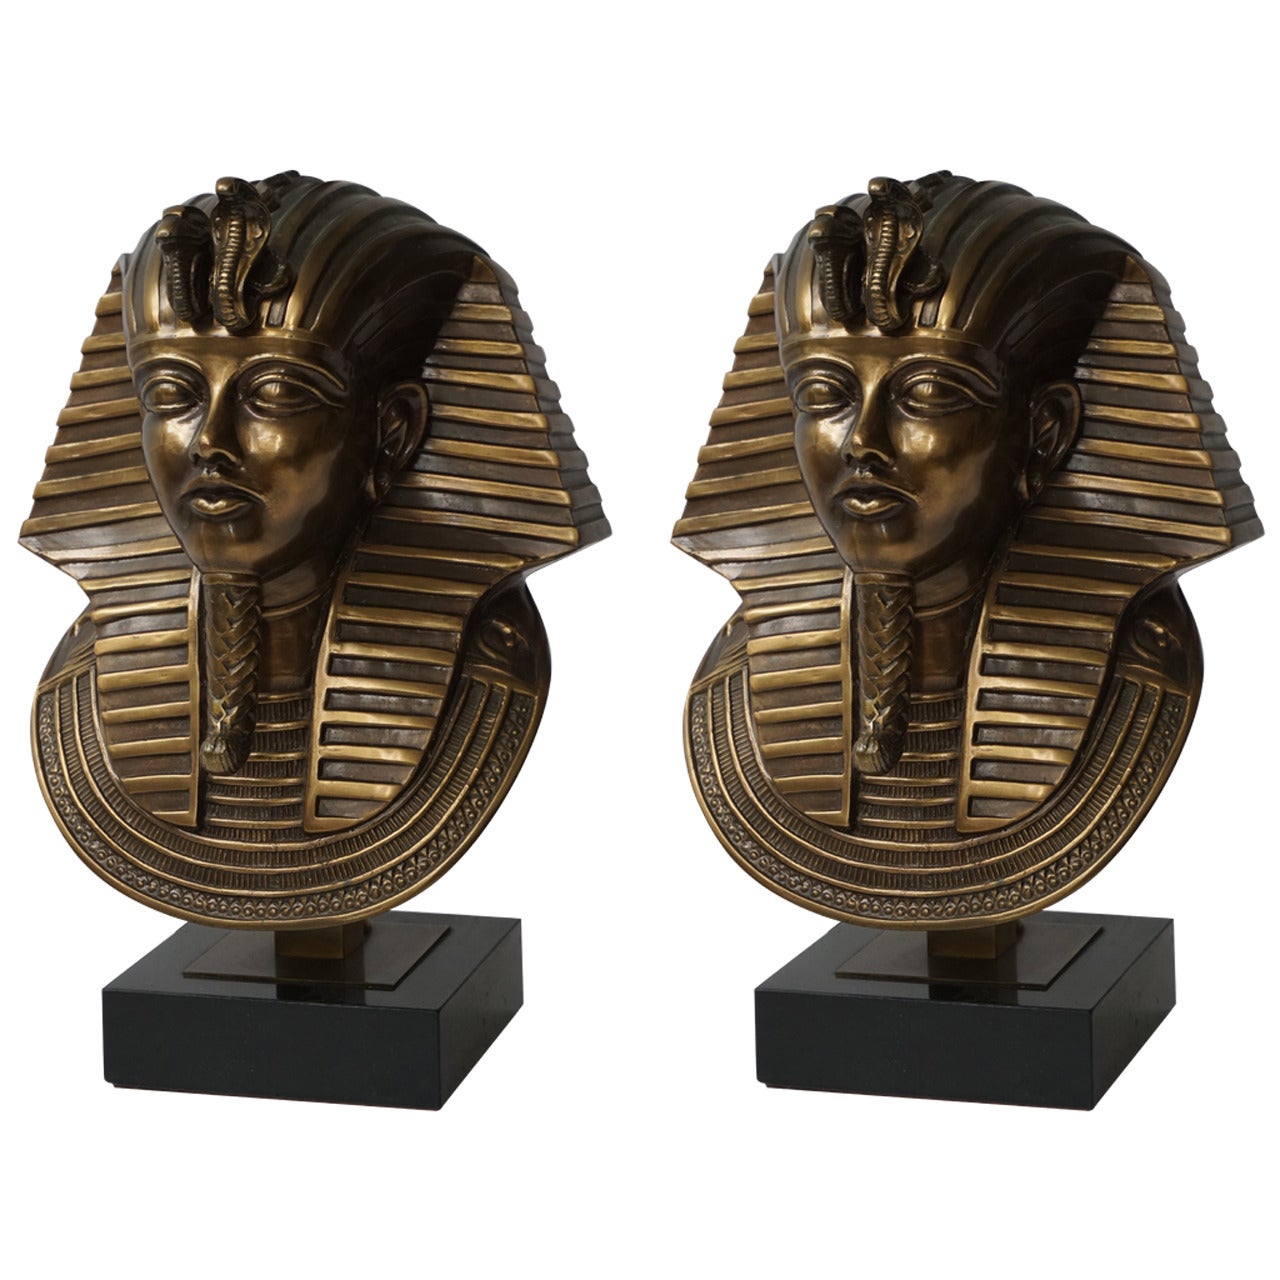 One "Pharaoh" Table Lamp